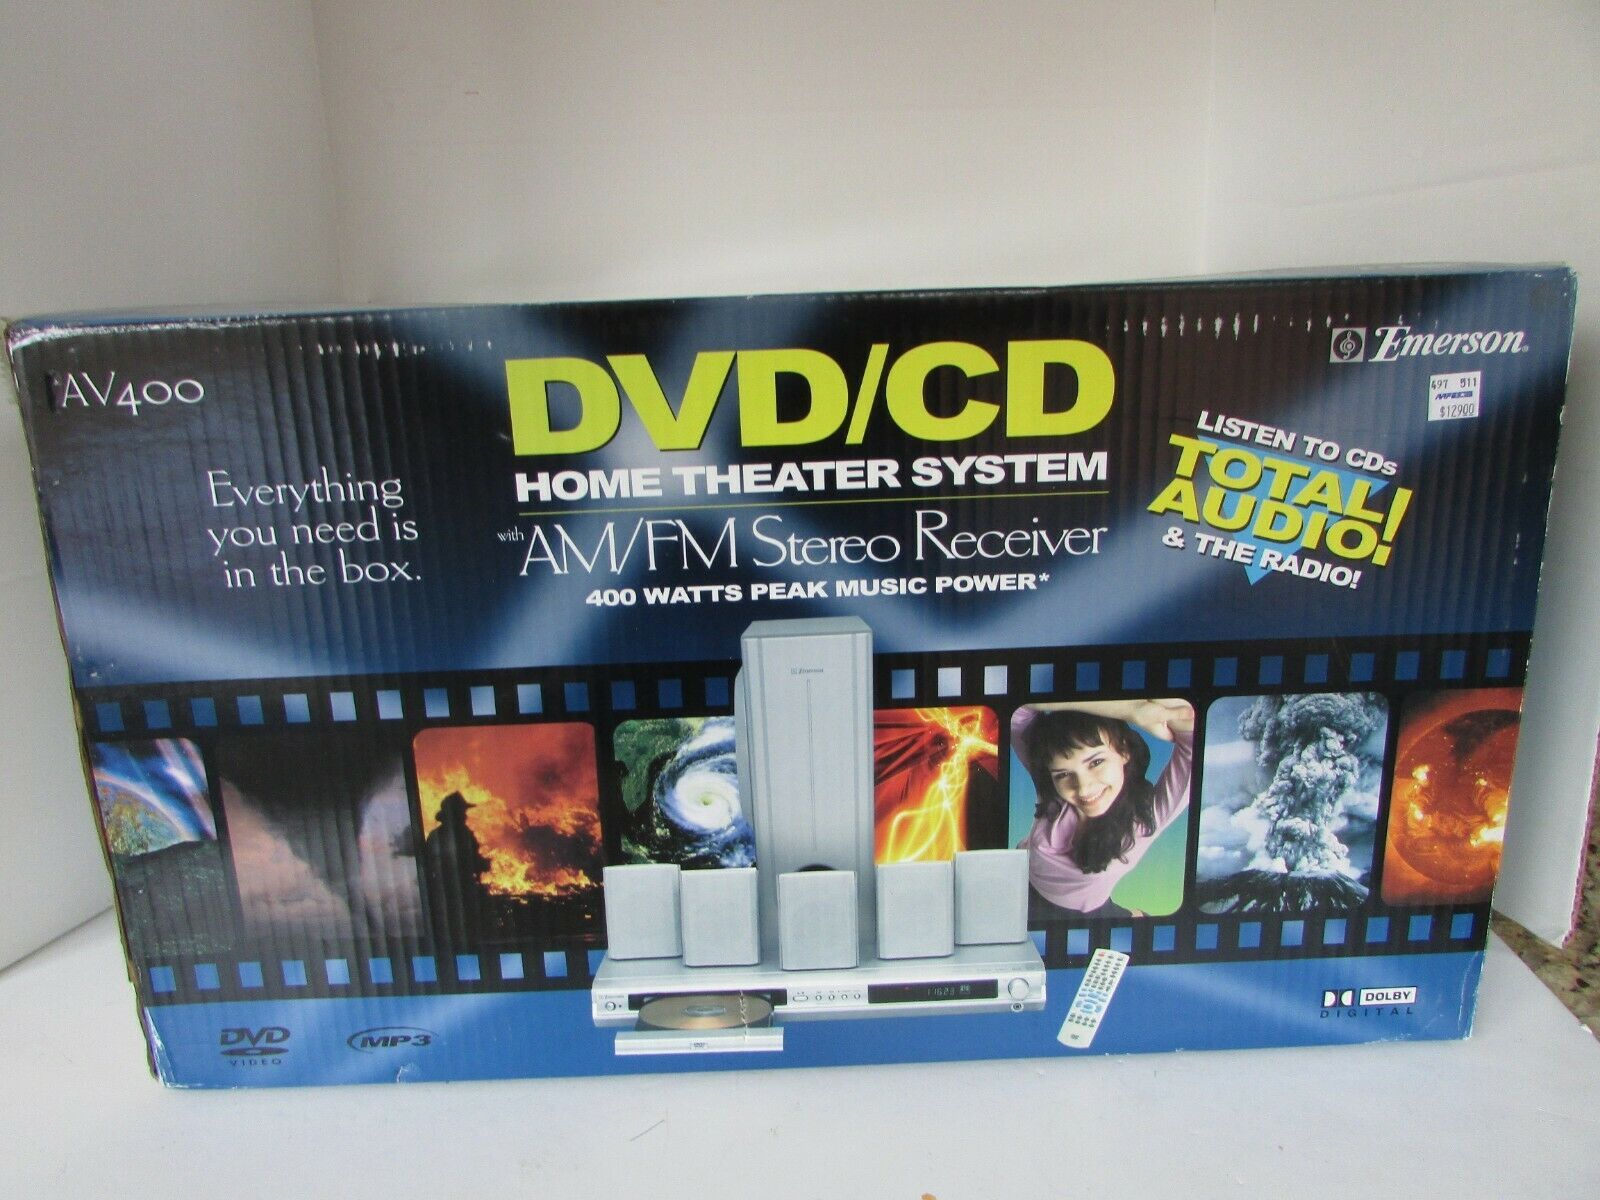 EMERSON AV400 DVD/CD HOME THEATER SYSTEM BRAND NEW AM/FM RECEIVER DOLBY DIGITAL - $97.02